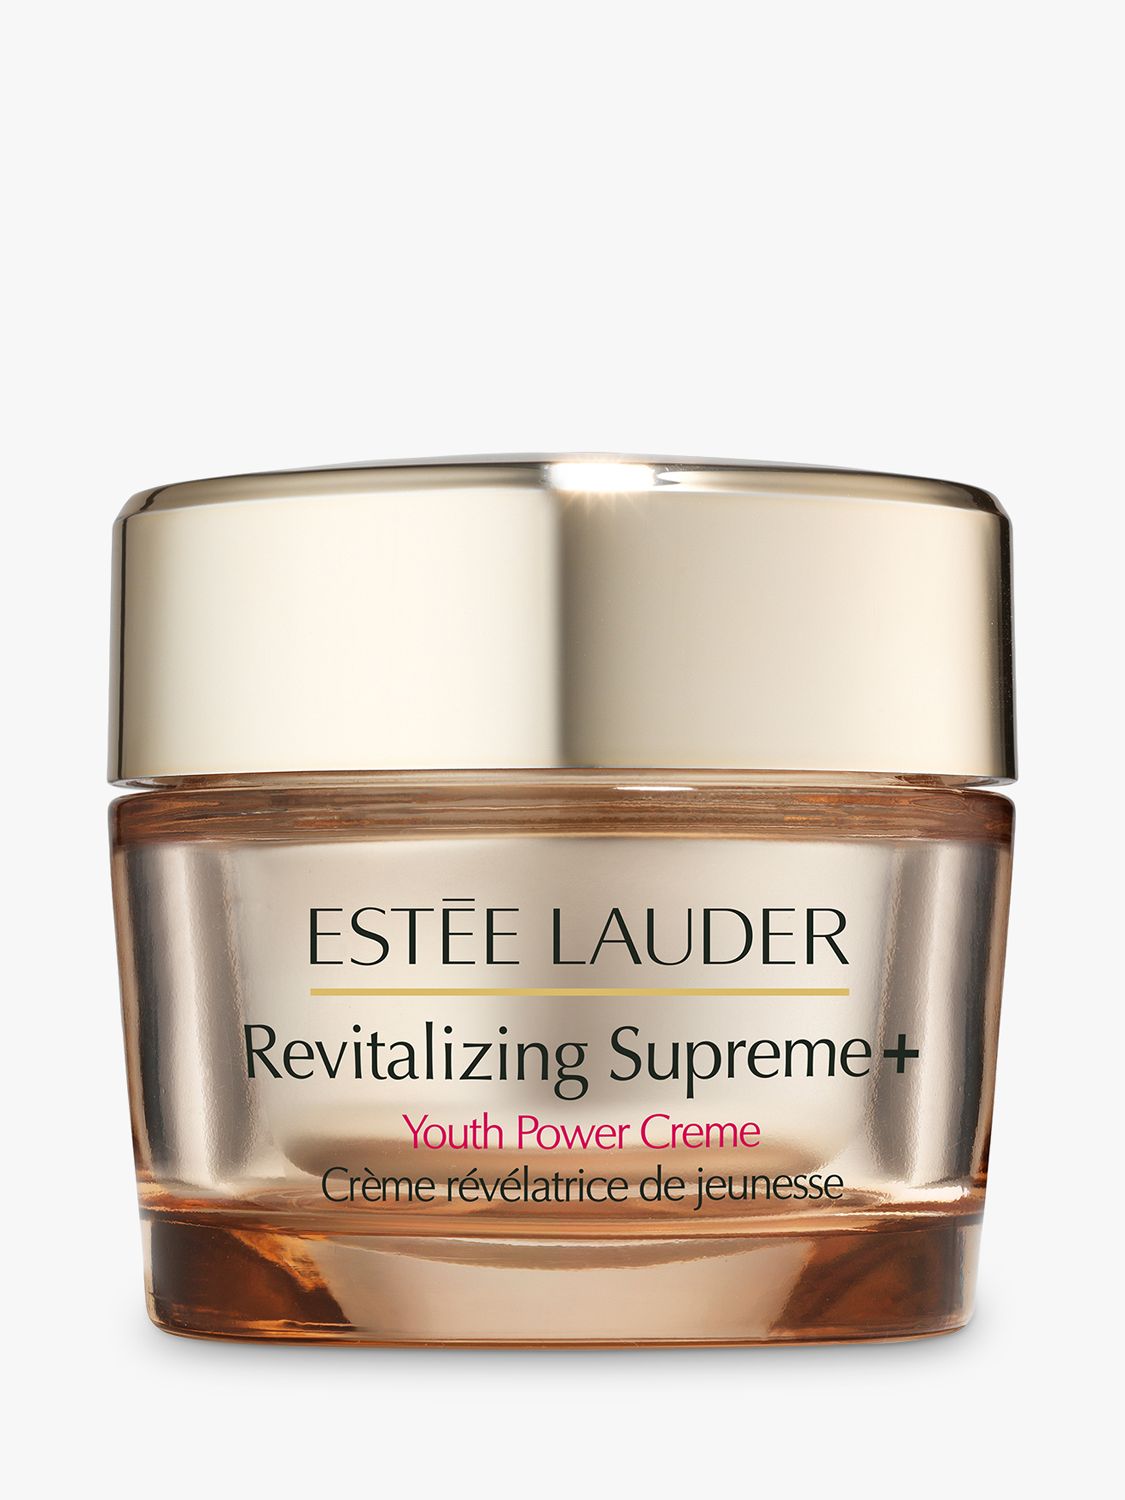 Крем для лица Estee Lauder Revitalizing Supreme+ Youth Power crème фото